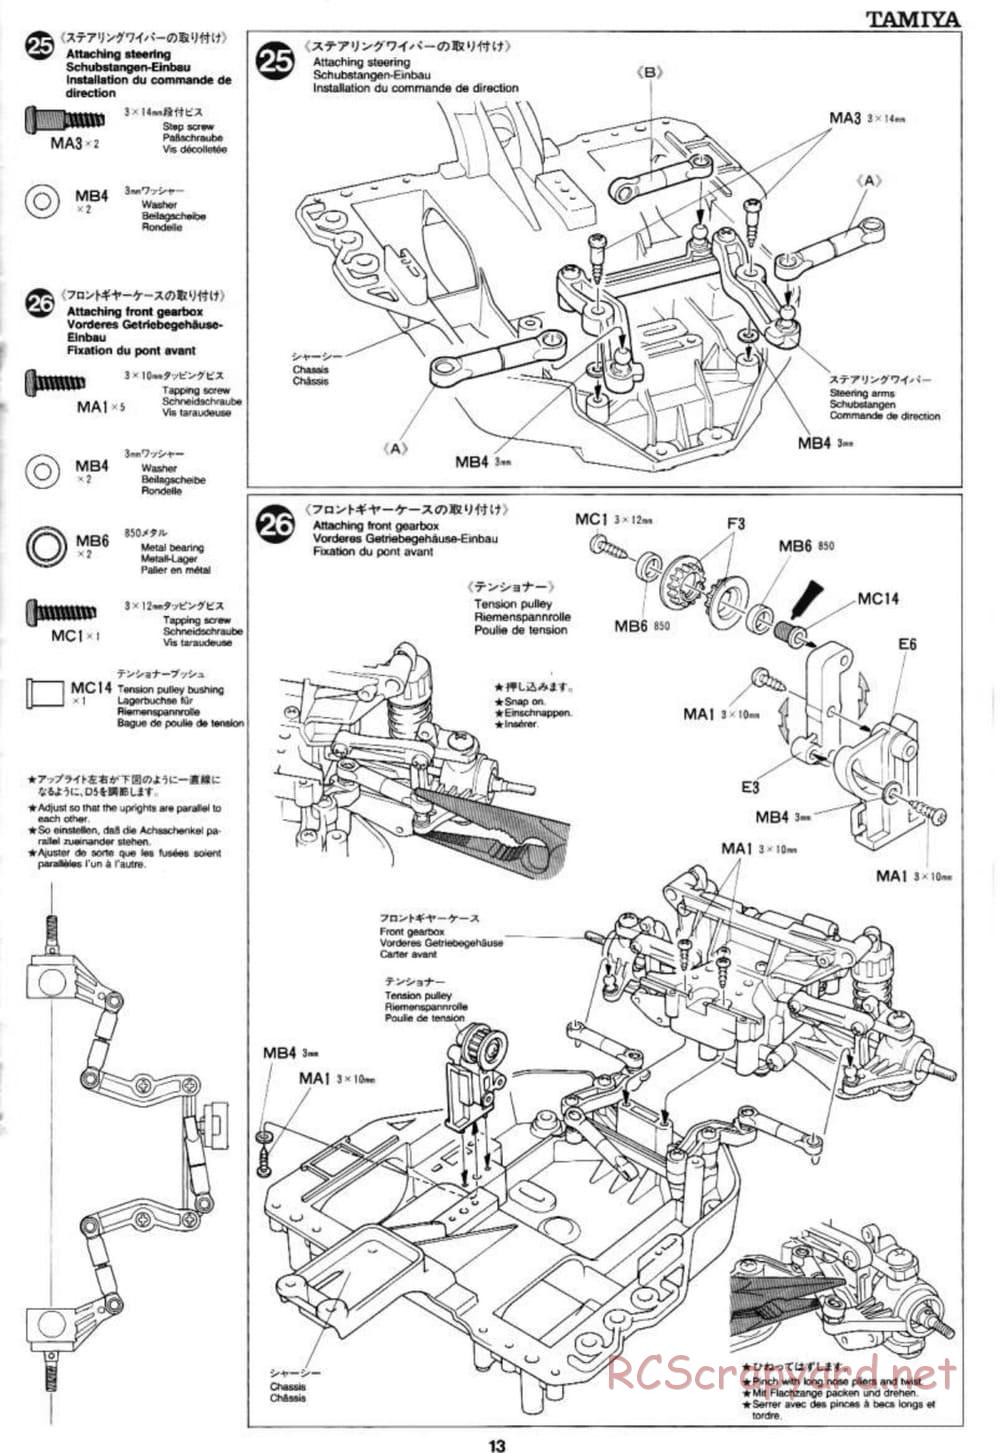 Tamiya - PIAA Porsche 911 - TA-03RS Chassis - Manual - Page 13